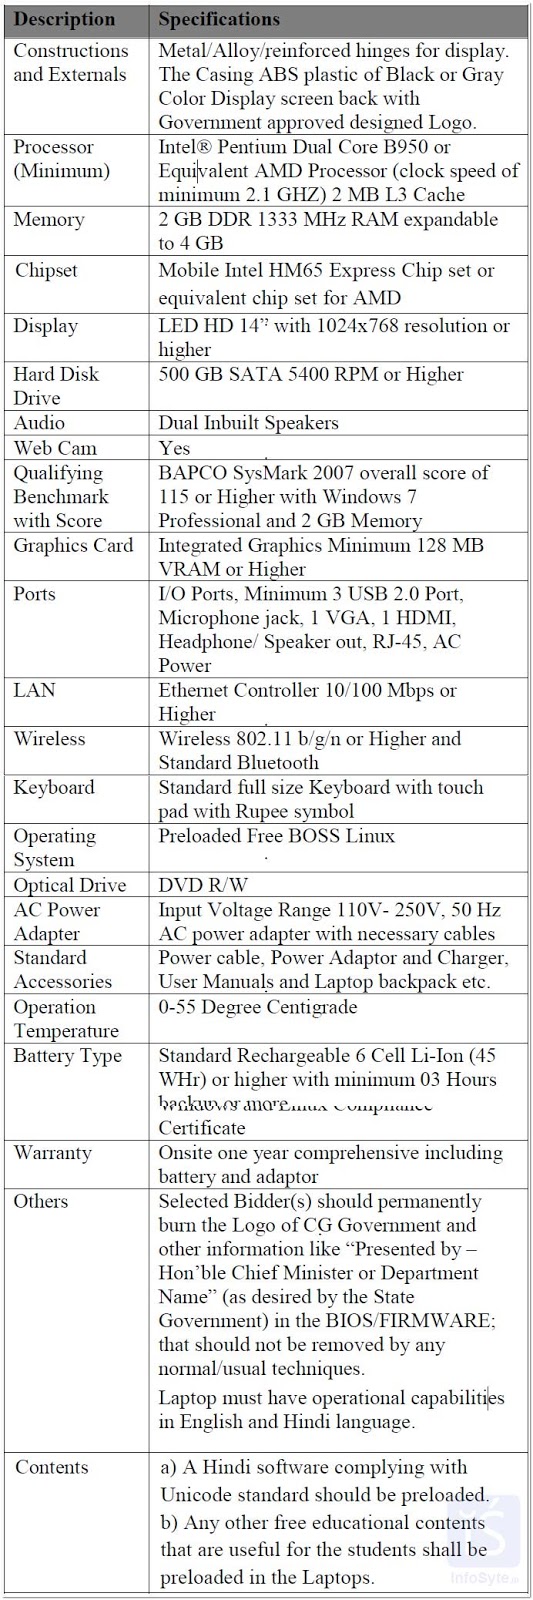 Free-Laptop-Specifications-CG-GOVT